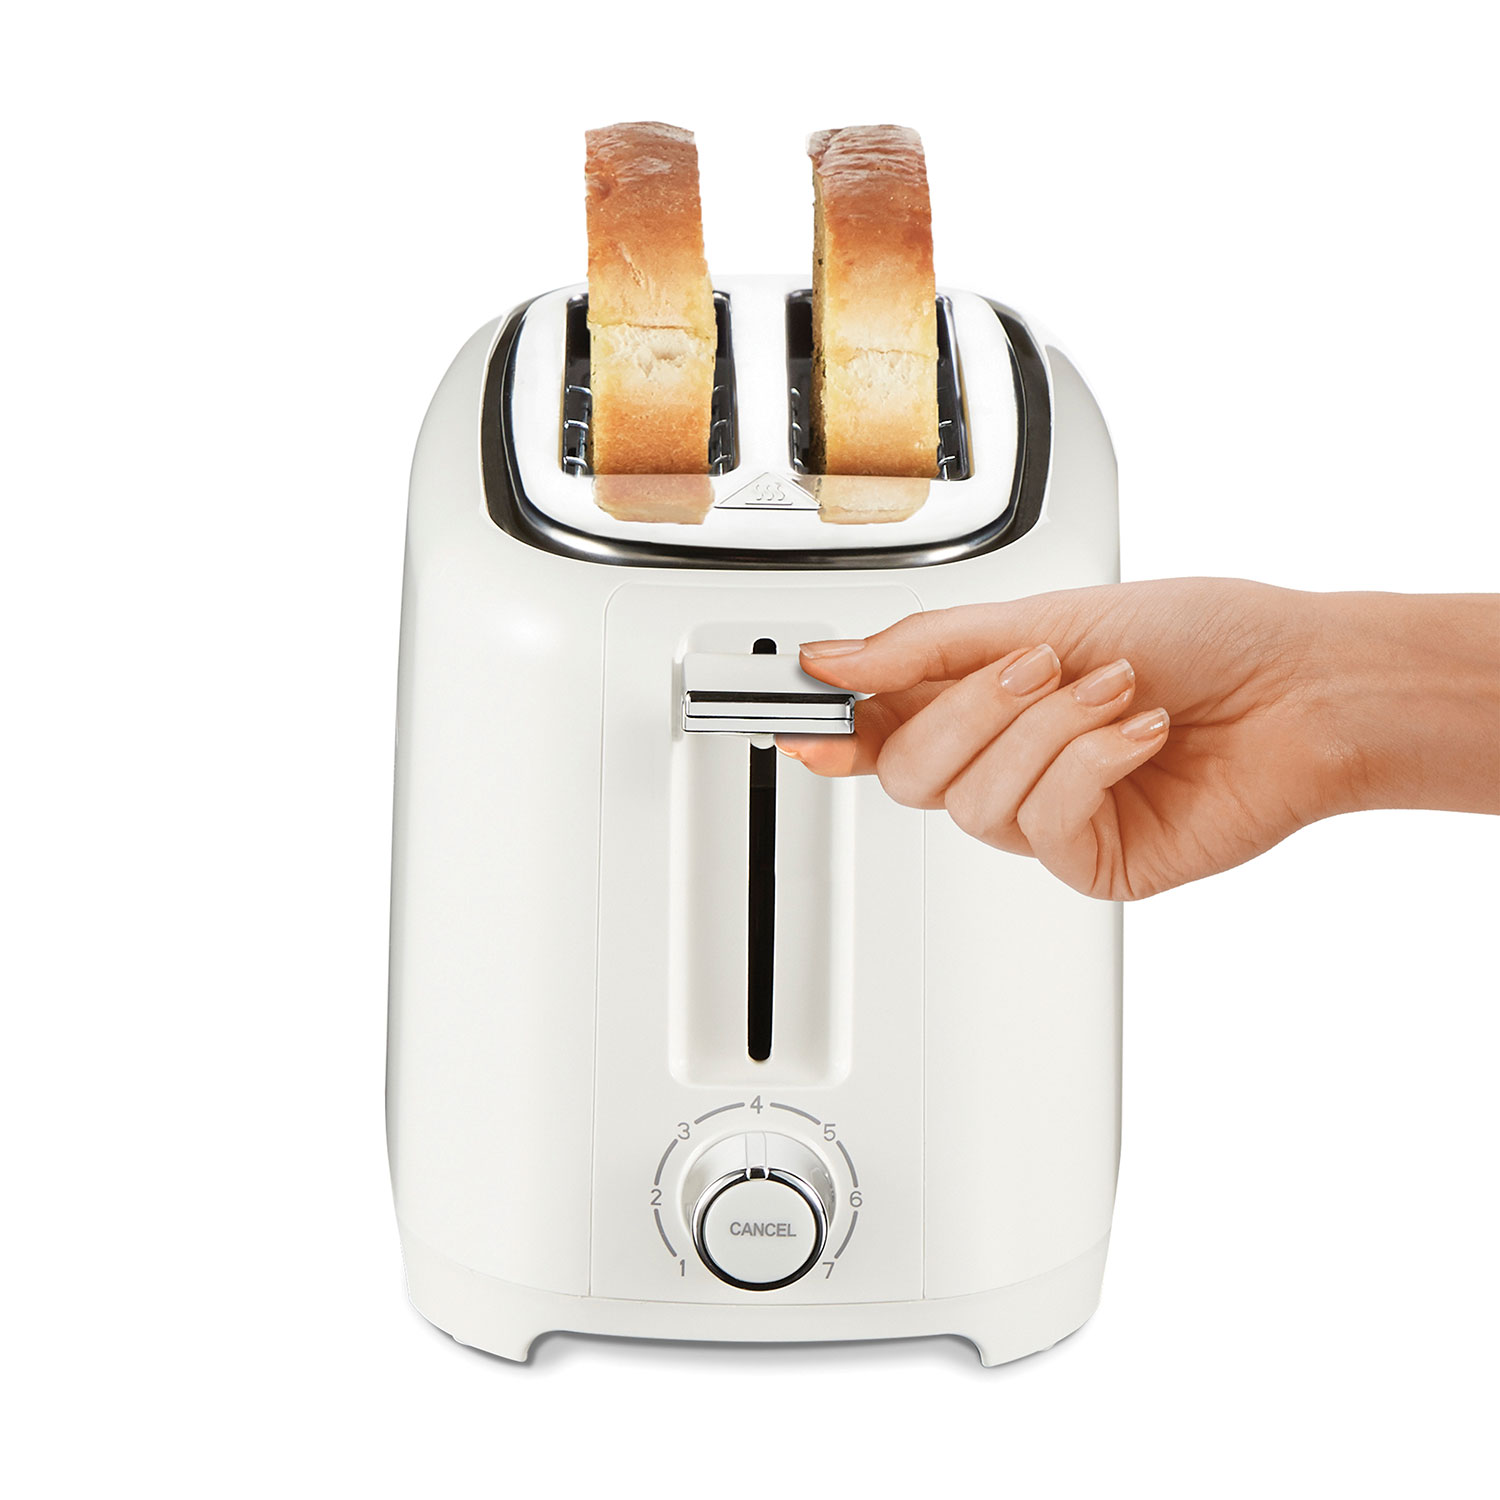 Hamilton Beach 2 Slice Toaster with Extra-Wide Slots, White - 22218